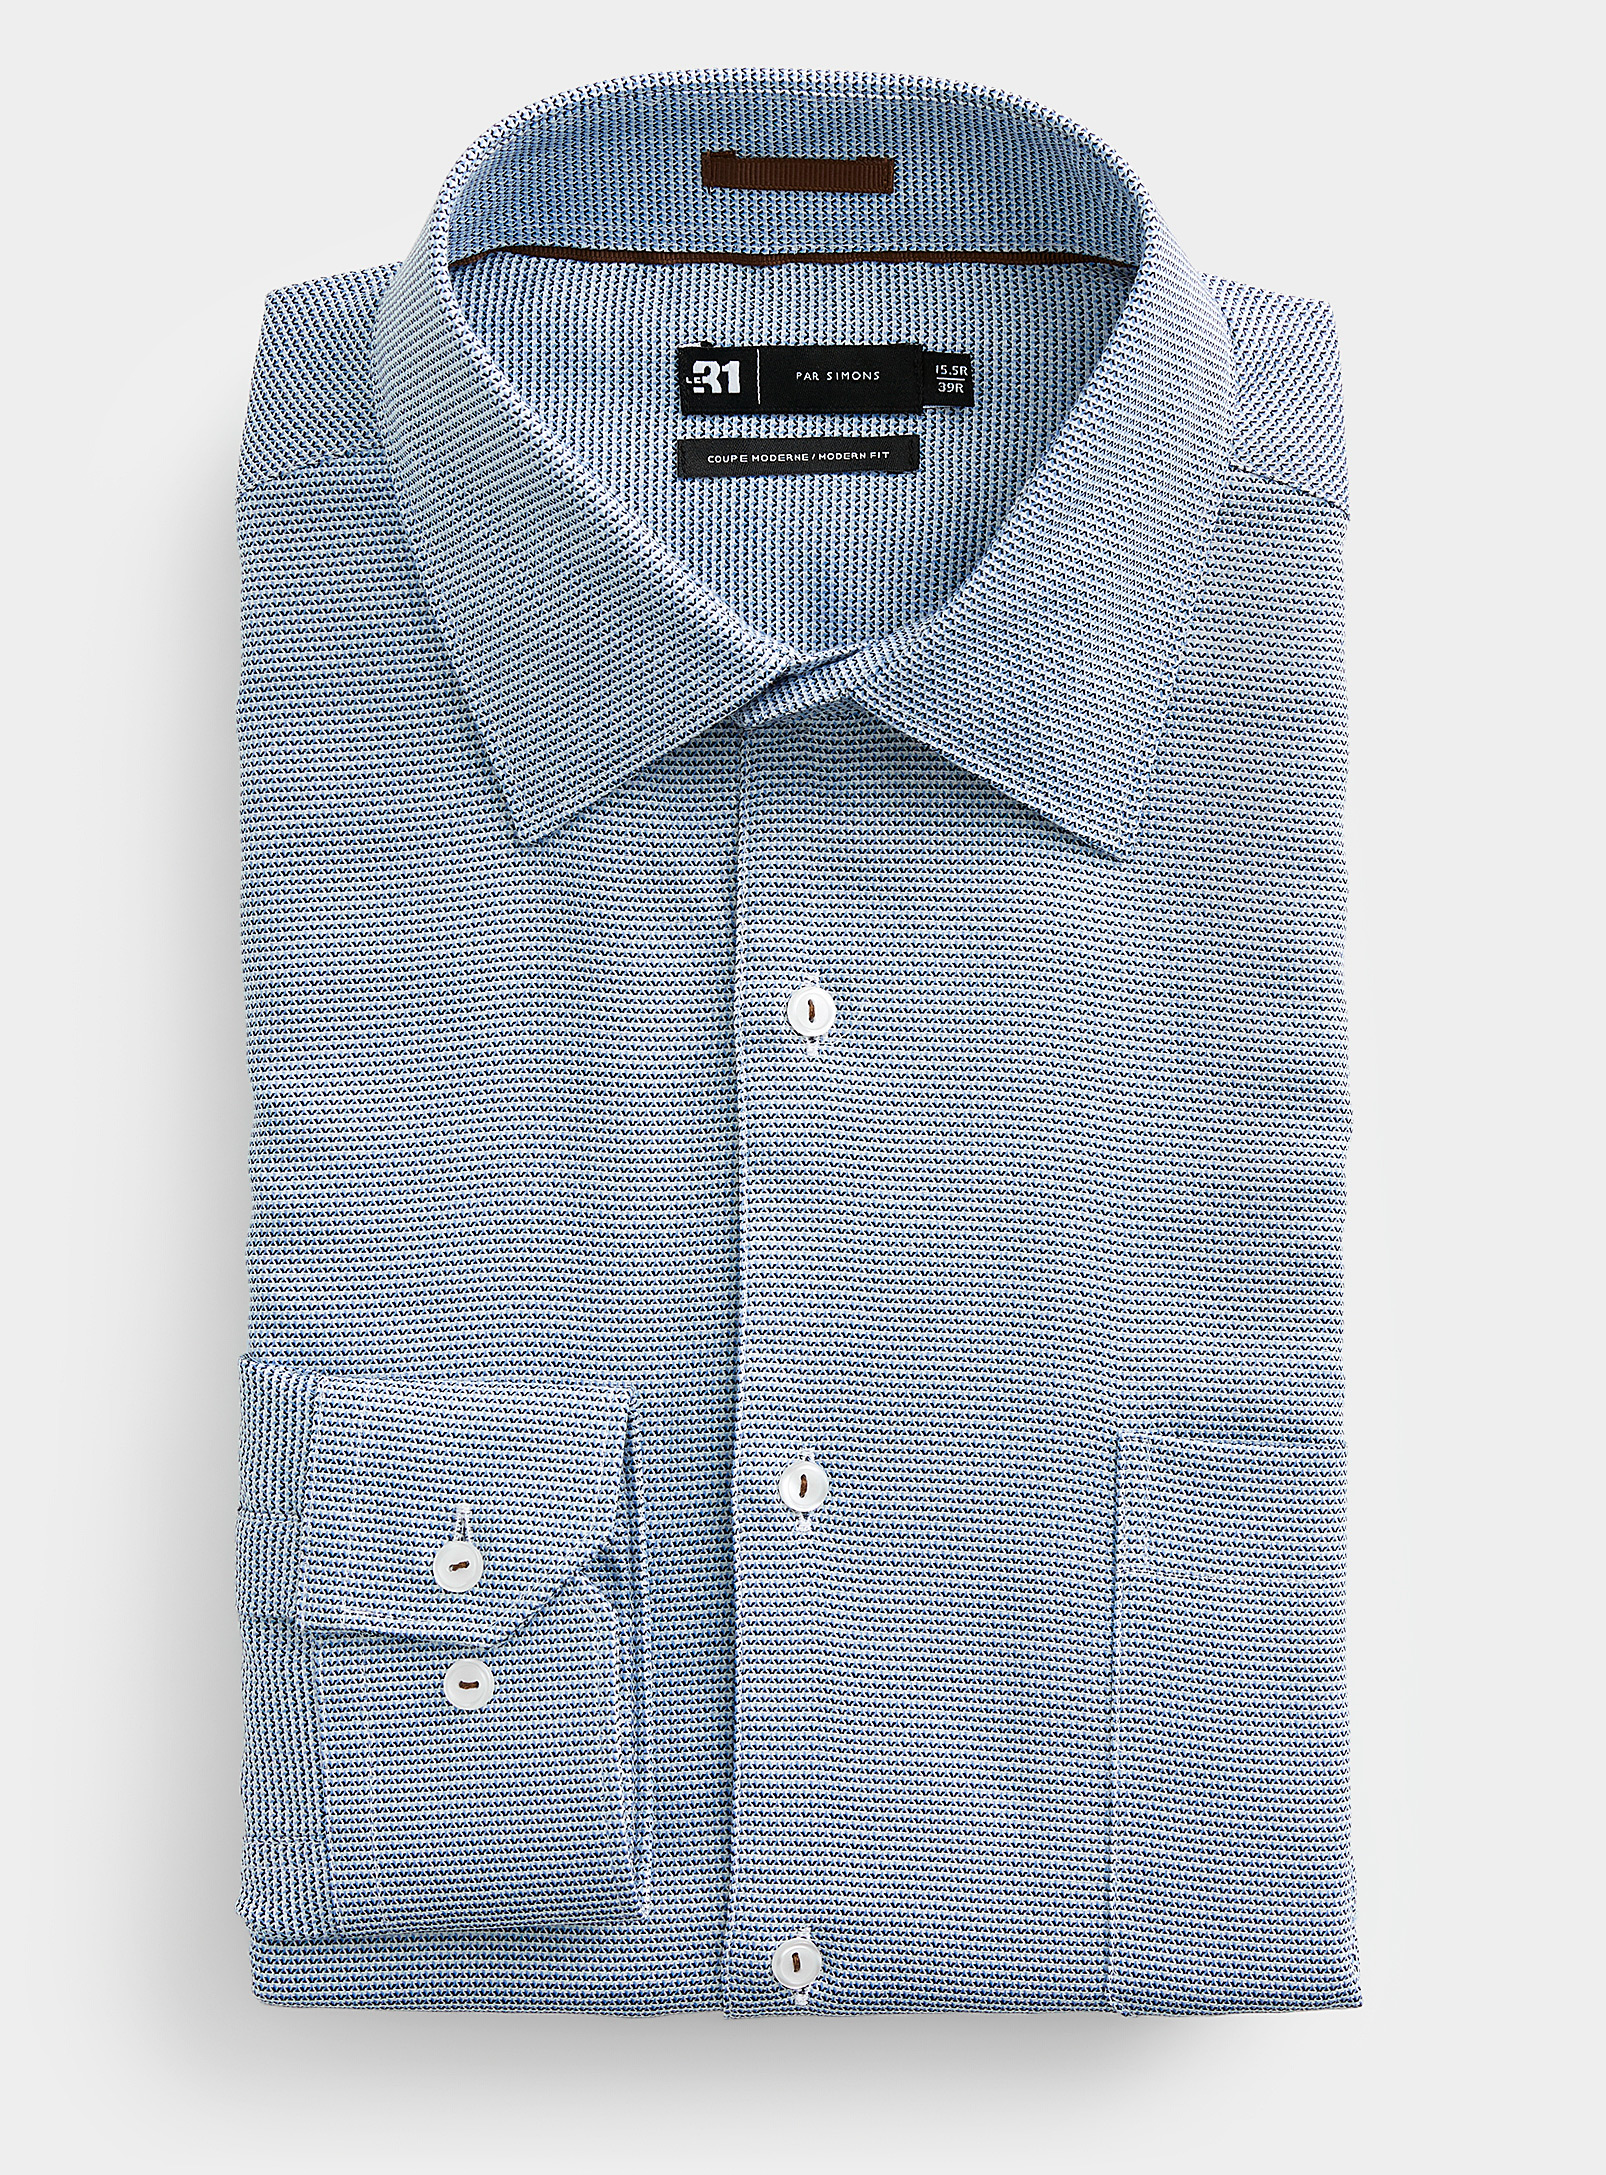 Le 31 Jacquard Mini-mosaic Blue Shirt Modern Fit